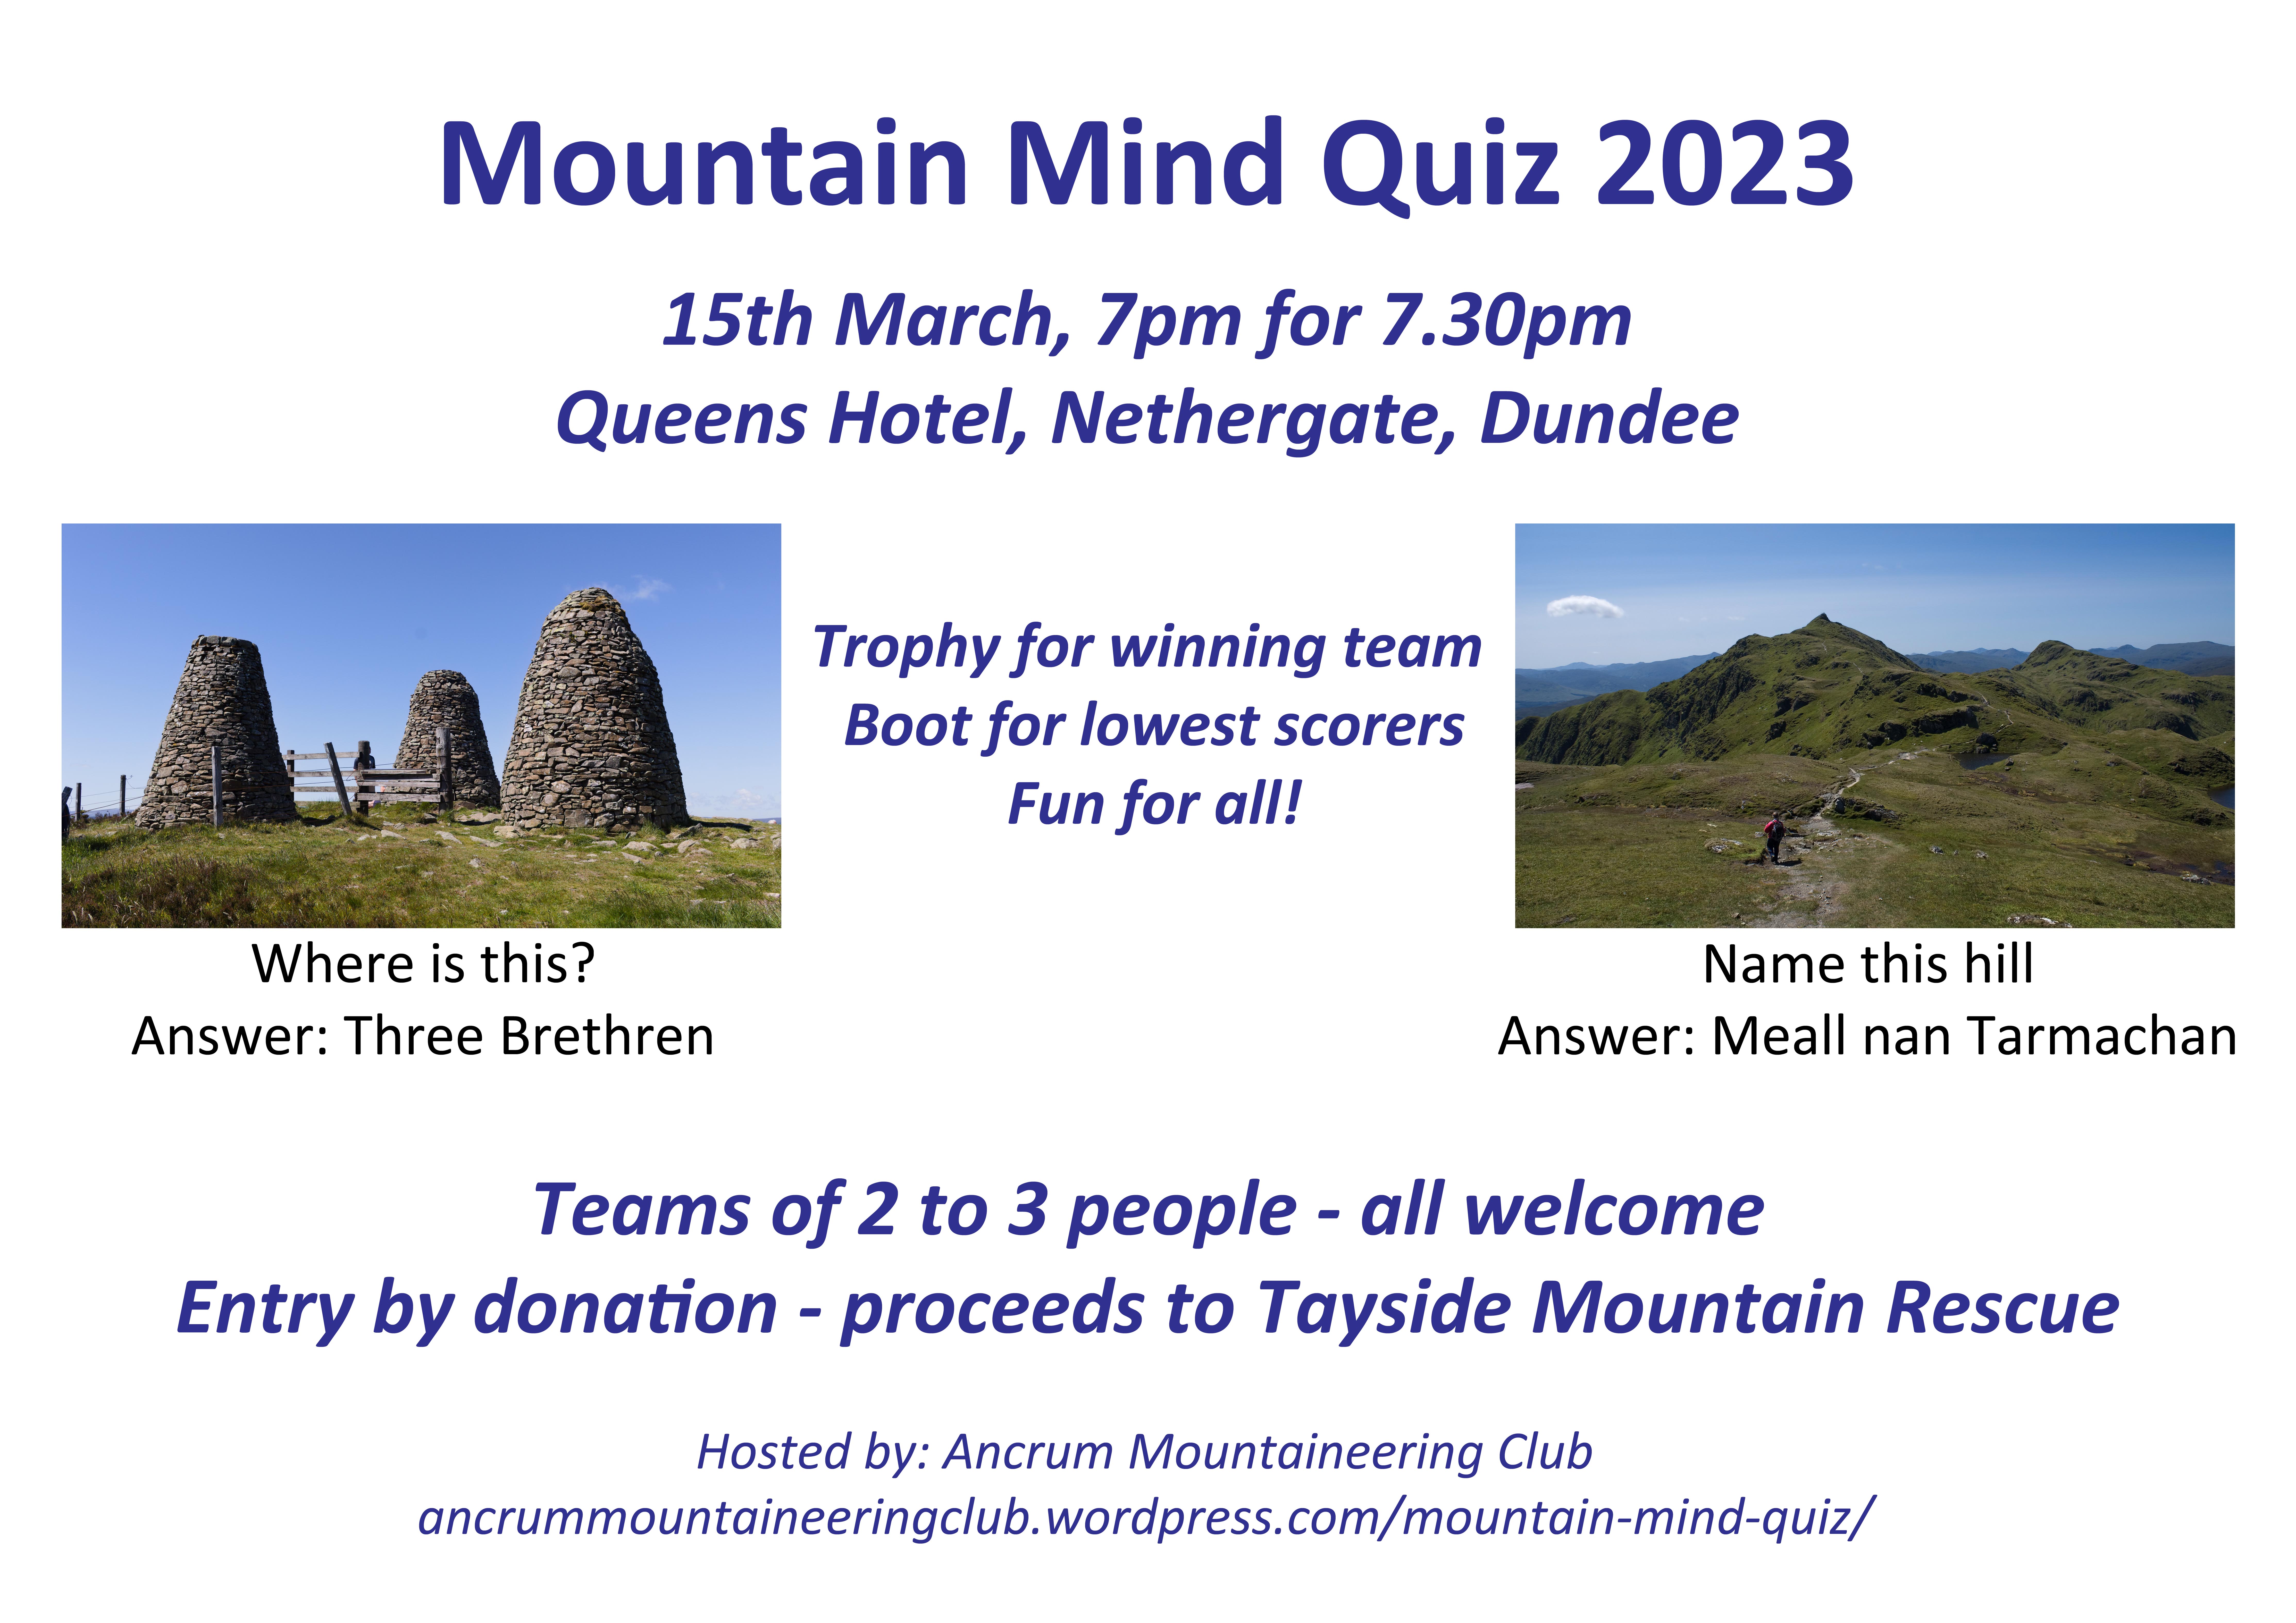 Mountain Mind Quiz 2023. Information at https://ancrummountaineeringclub.wordpress.com/mountain-mind-quiz/